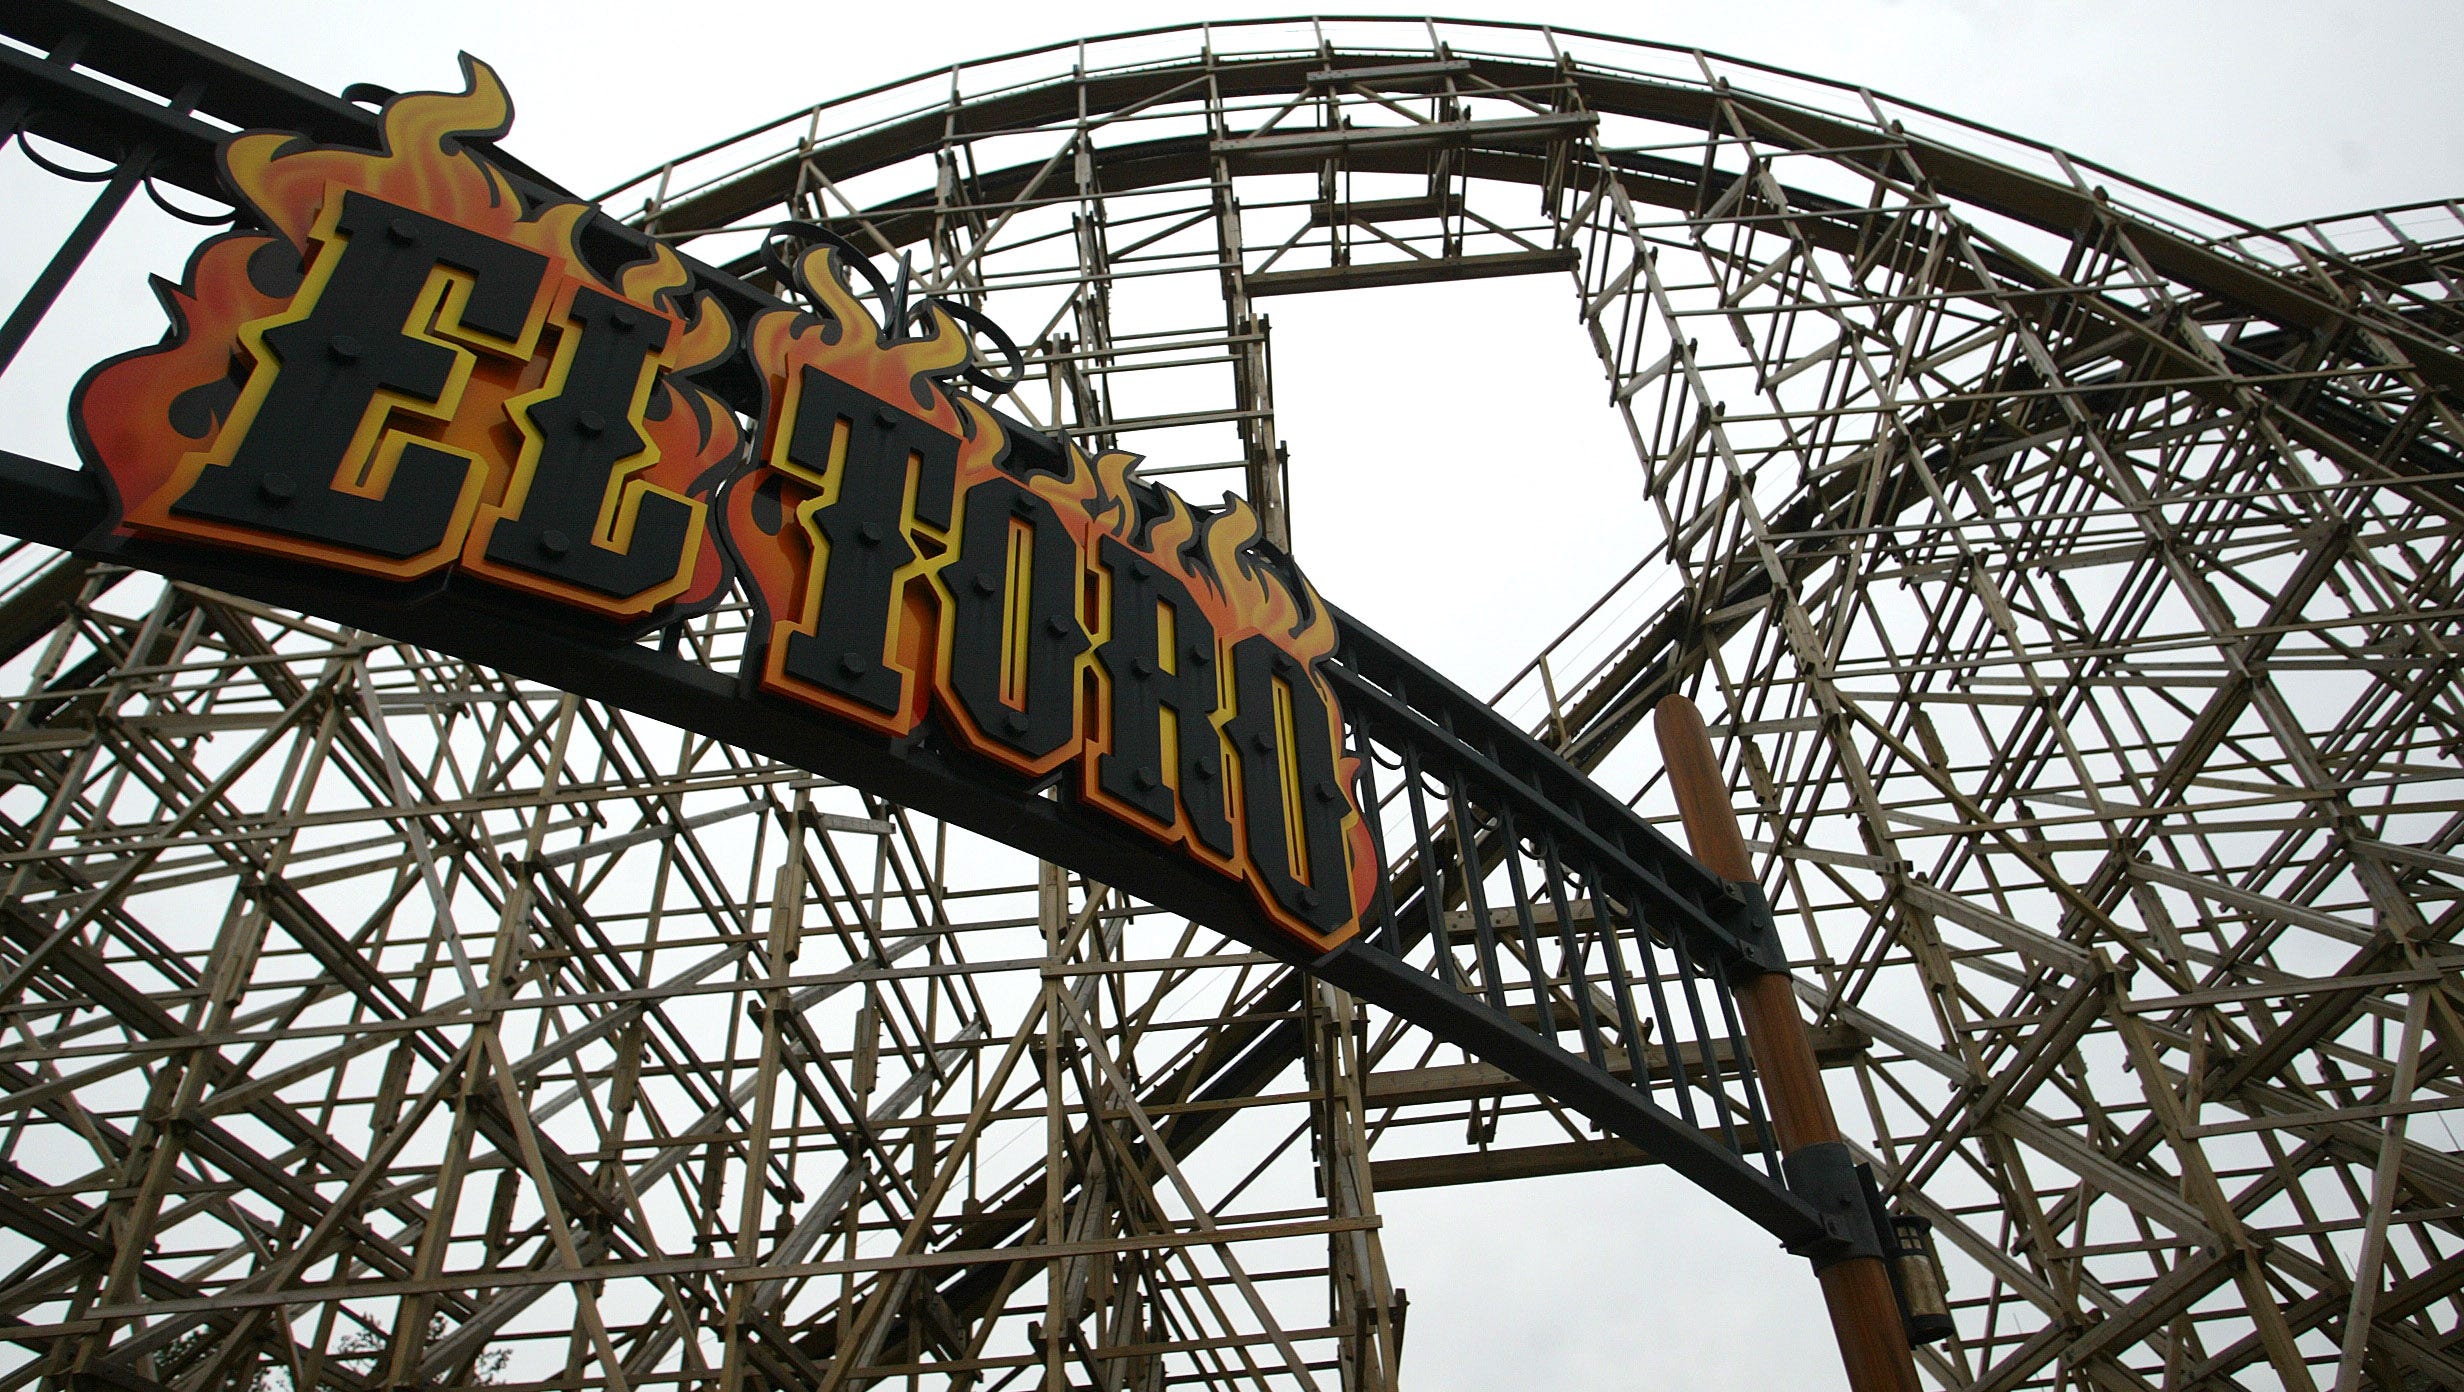 Six Flags roller coaster El Toro shut by NJ following derailment